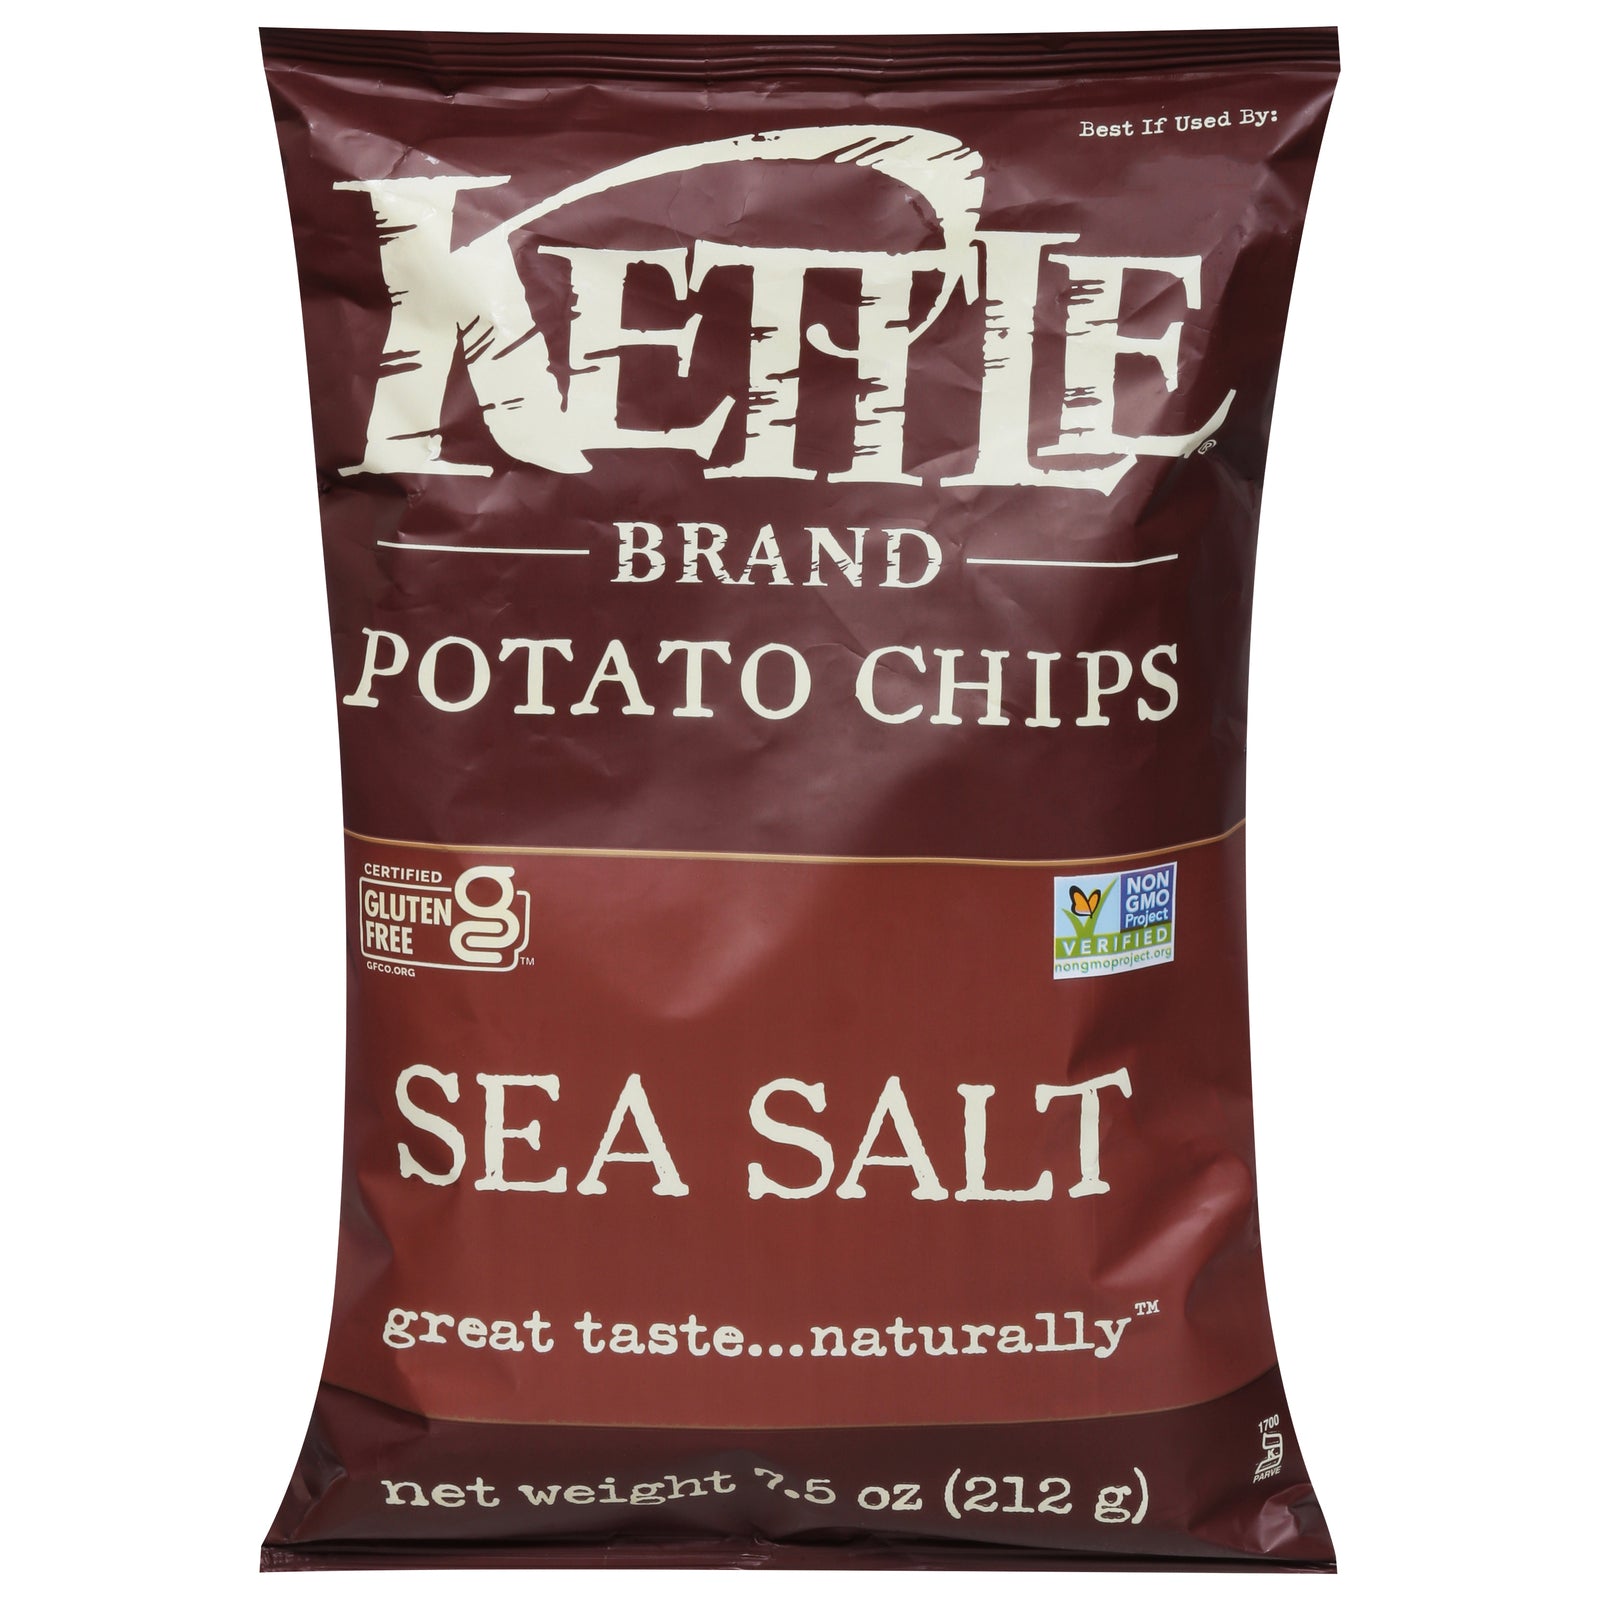 Kettle Brand - Potato Chips Sea Salt - Case Of 12-7.5 Oz